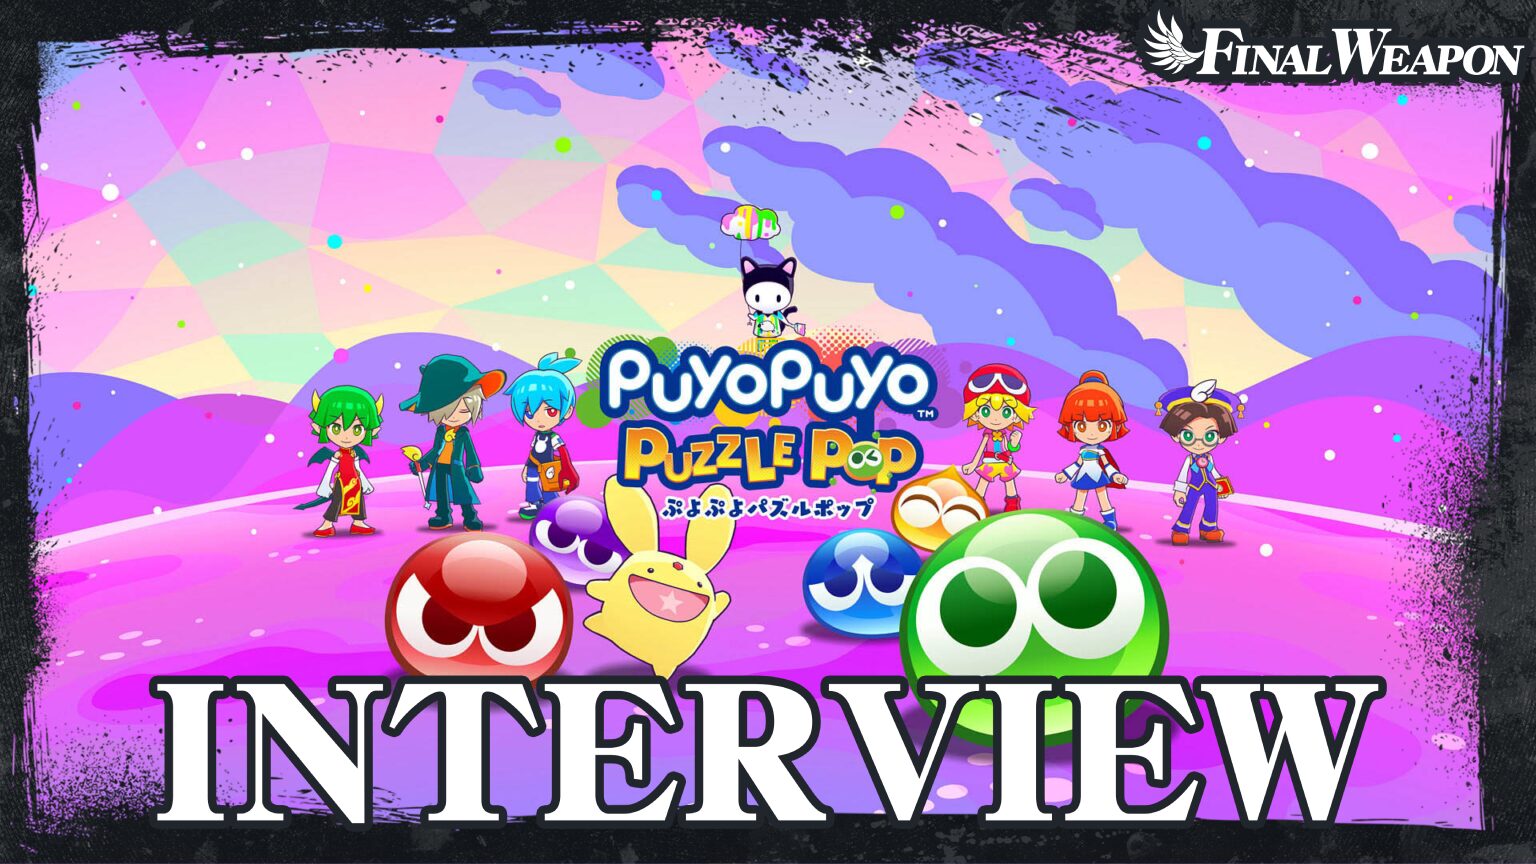 Интервью: Мизуки Хосоямада о Puyo Puyo Puzzle Pop и работе с Apple